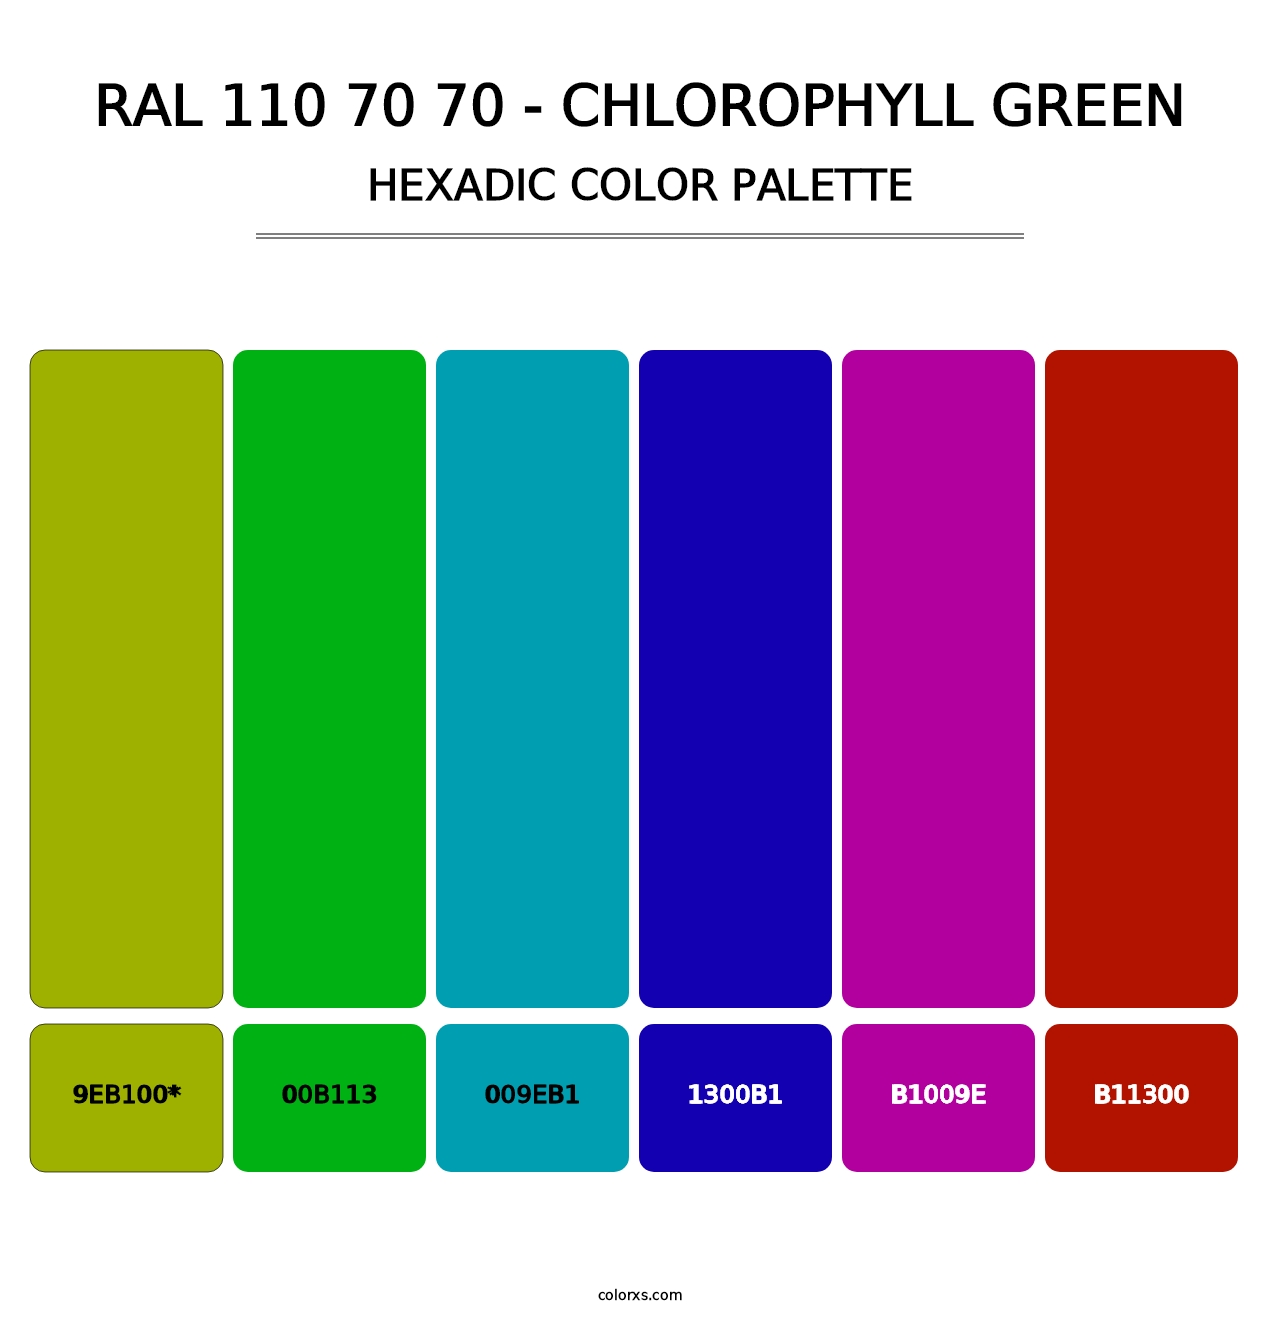 RAL 110 70 70 - Chlorophyll Green - Hexadic Color Palette